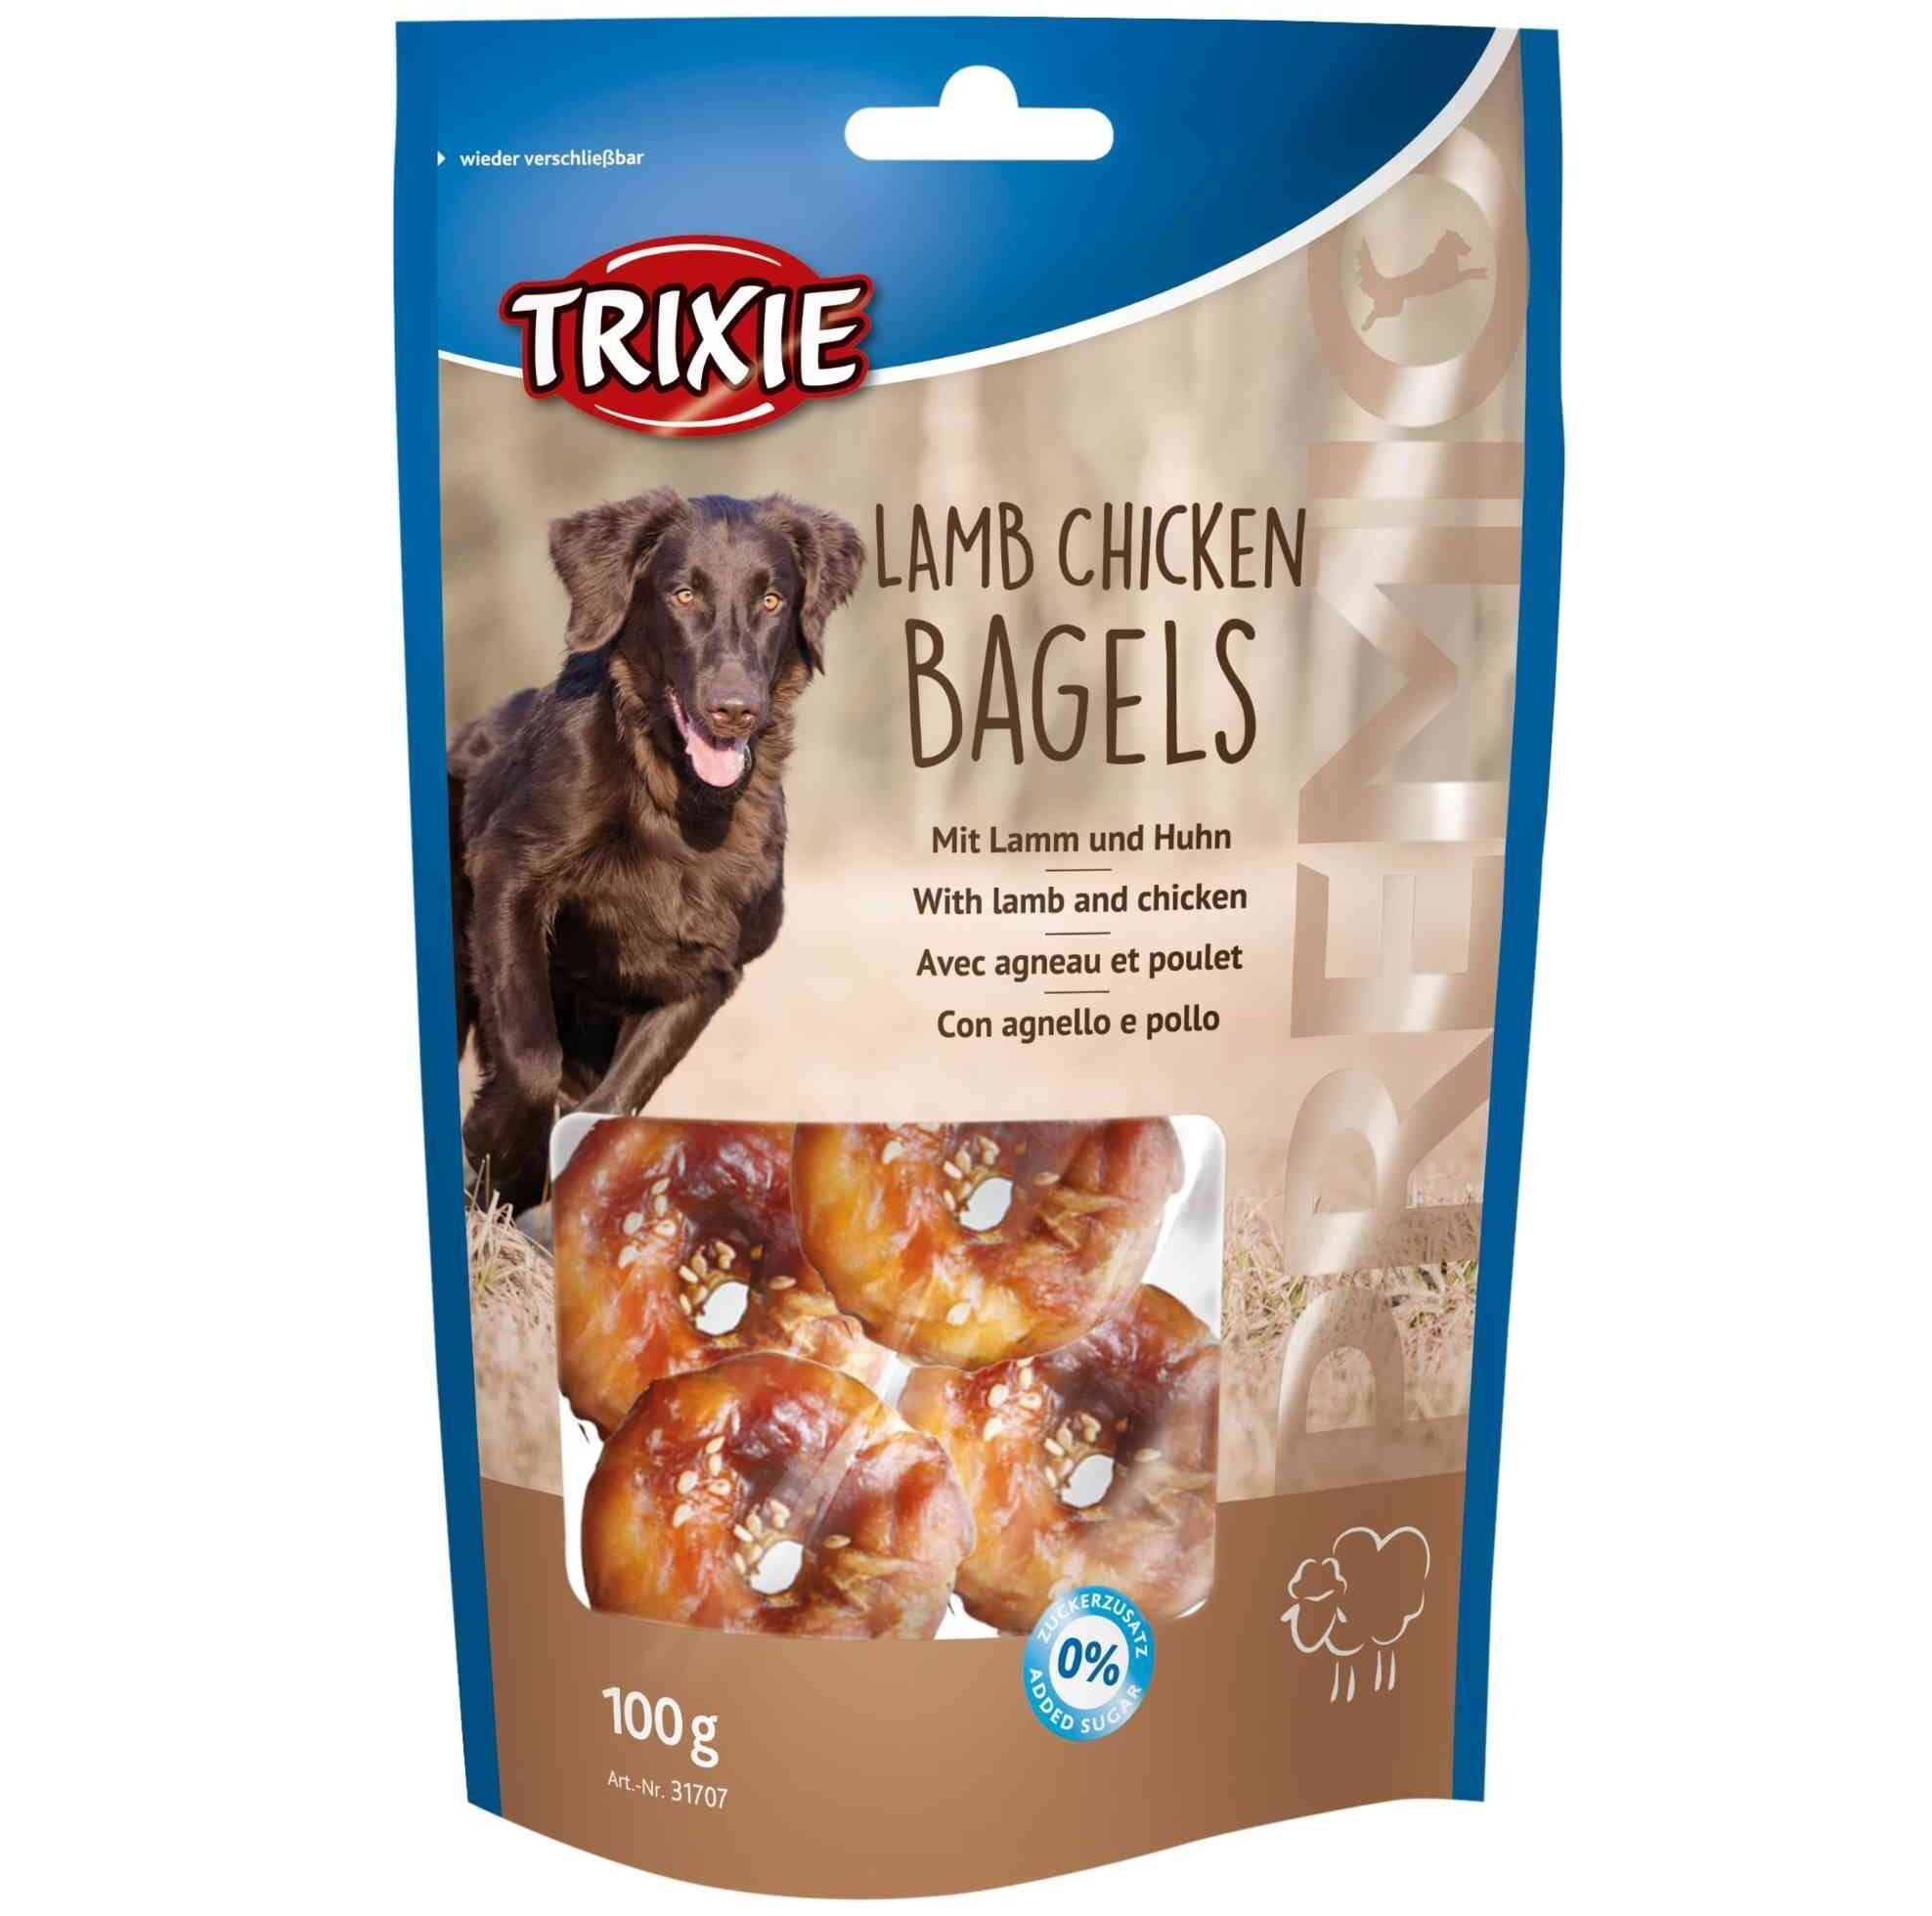 Лакомство для собак Trixie PREMIO Lamb Chicken Bagles кольца ягненок/курица 100гр фото 1